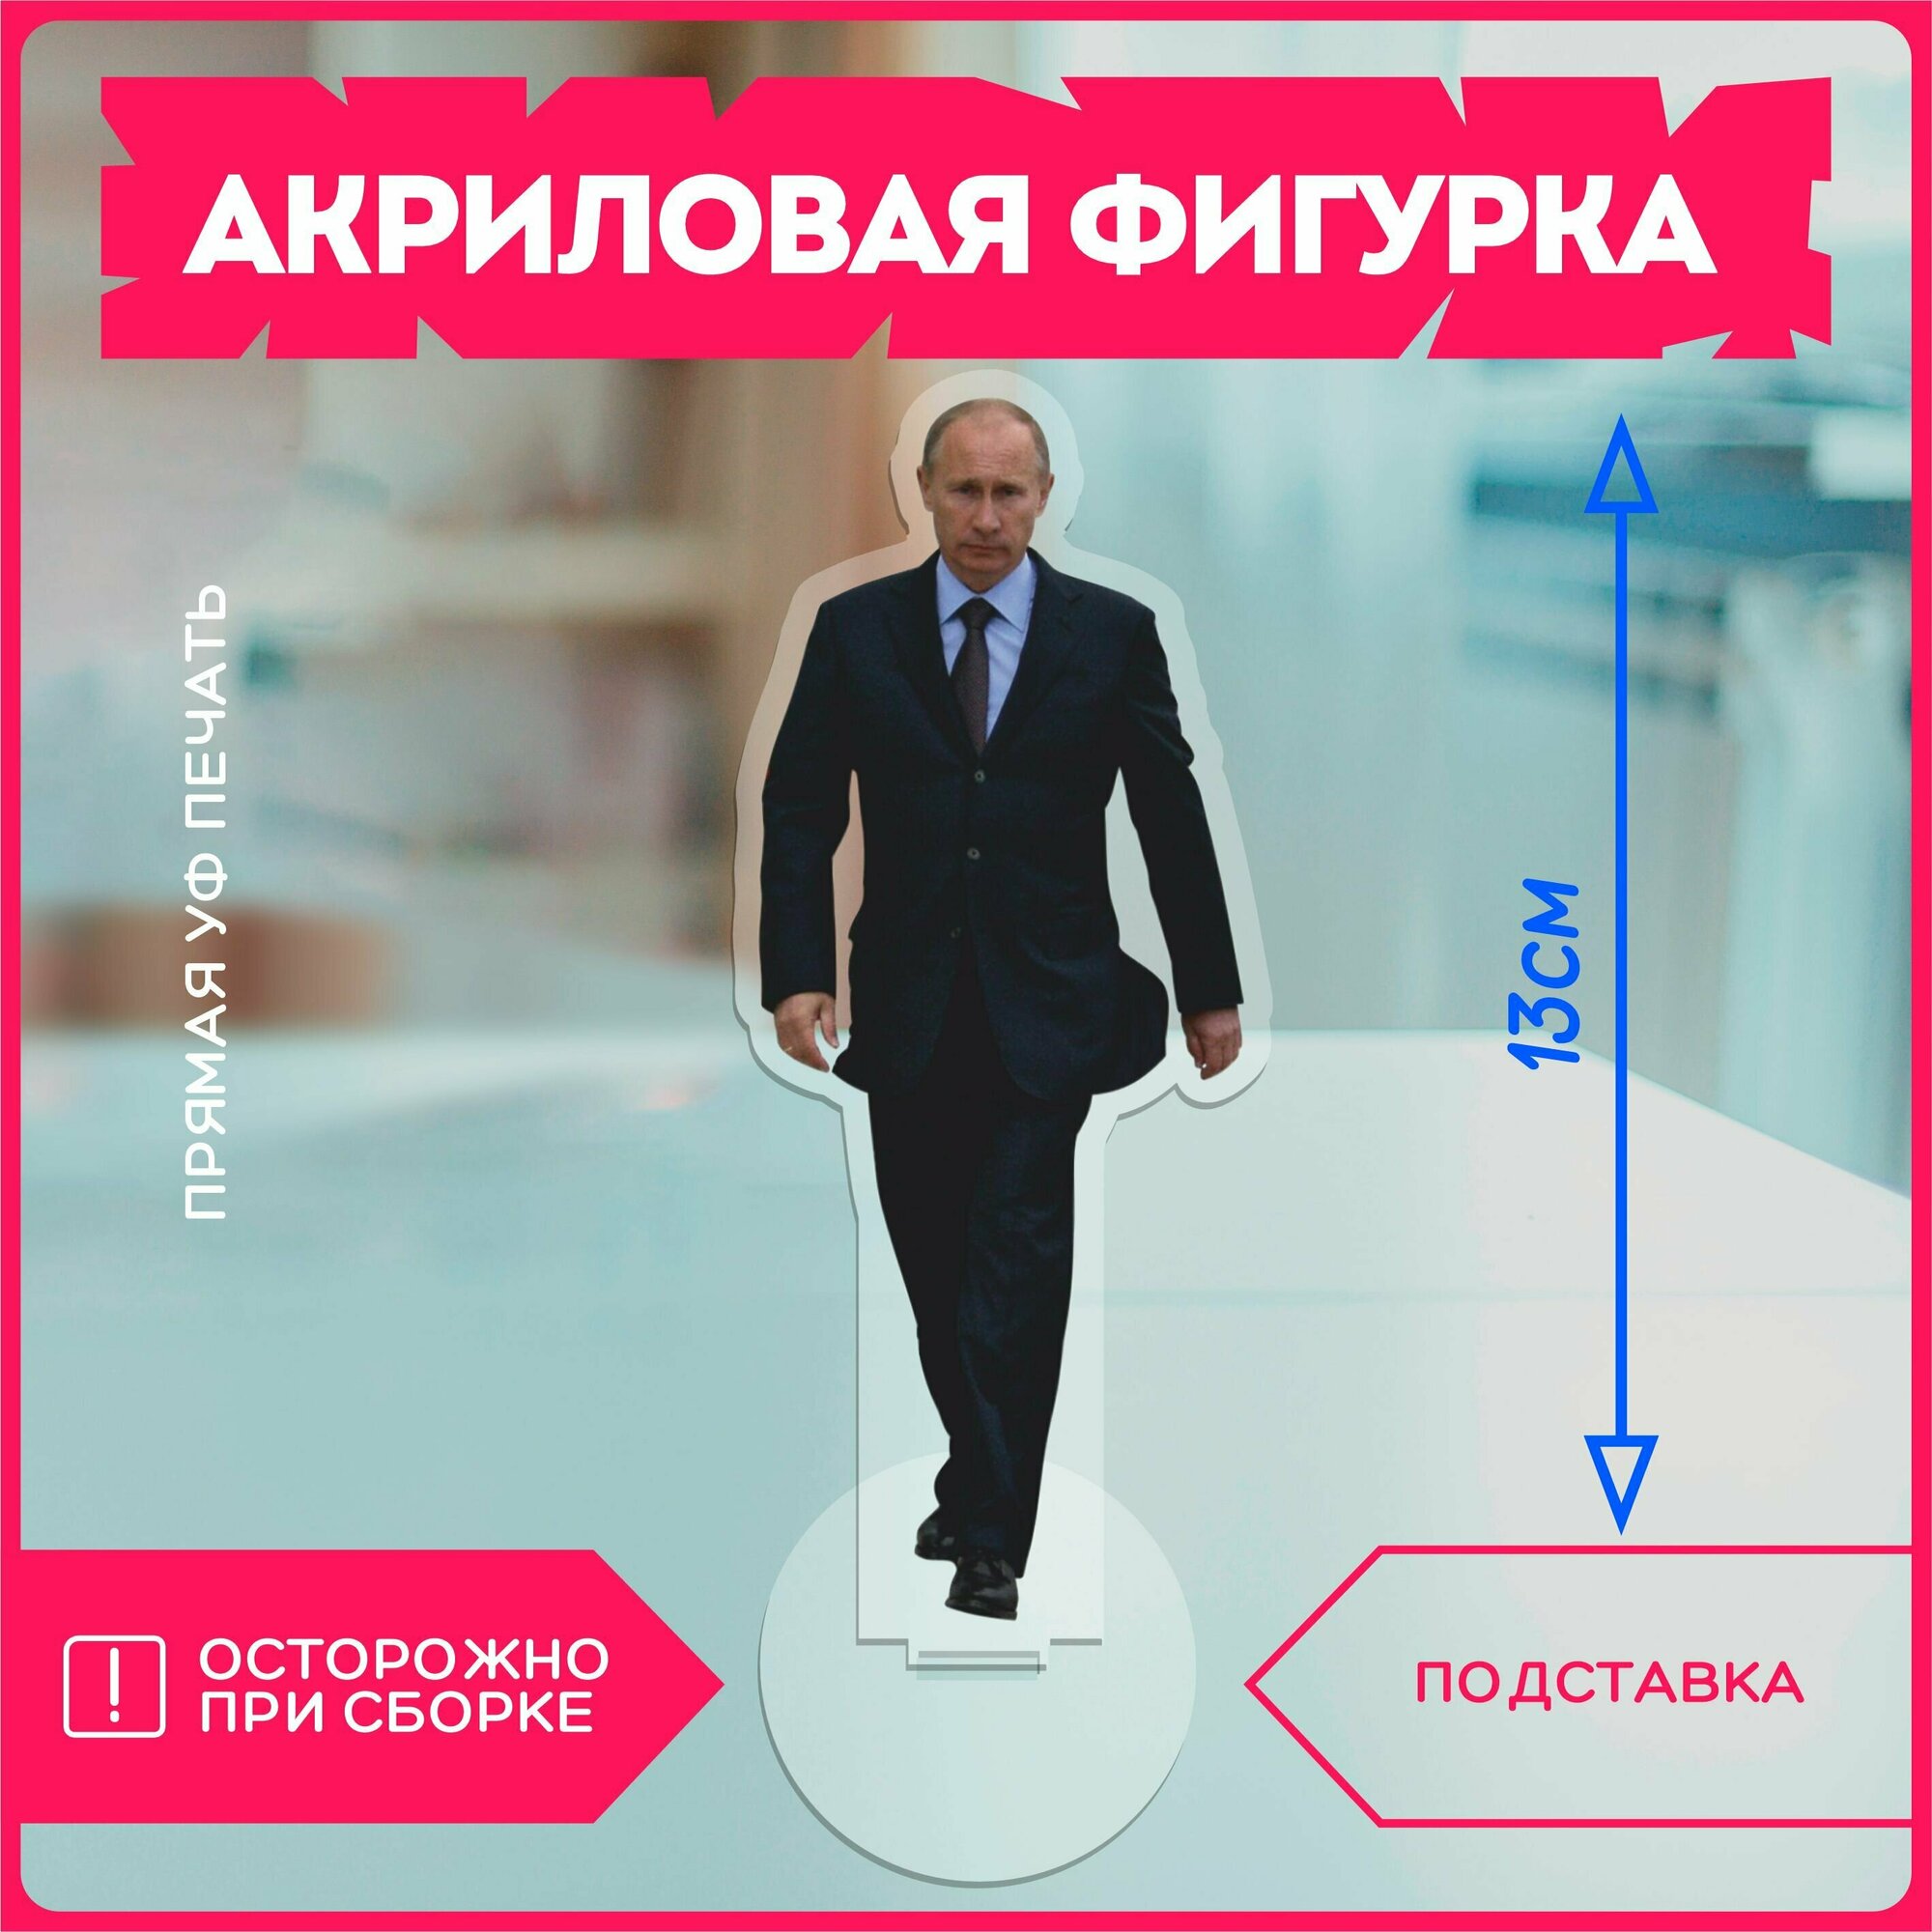 Акриловая фигурка статуэтка путин президент россия